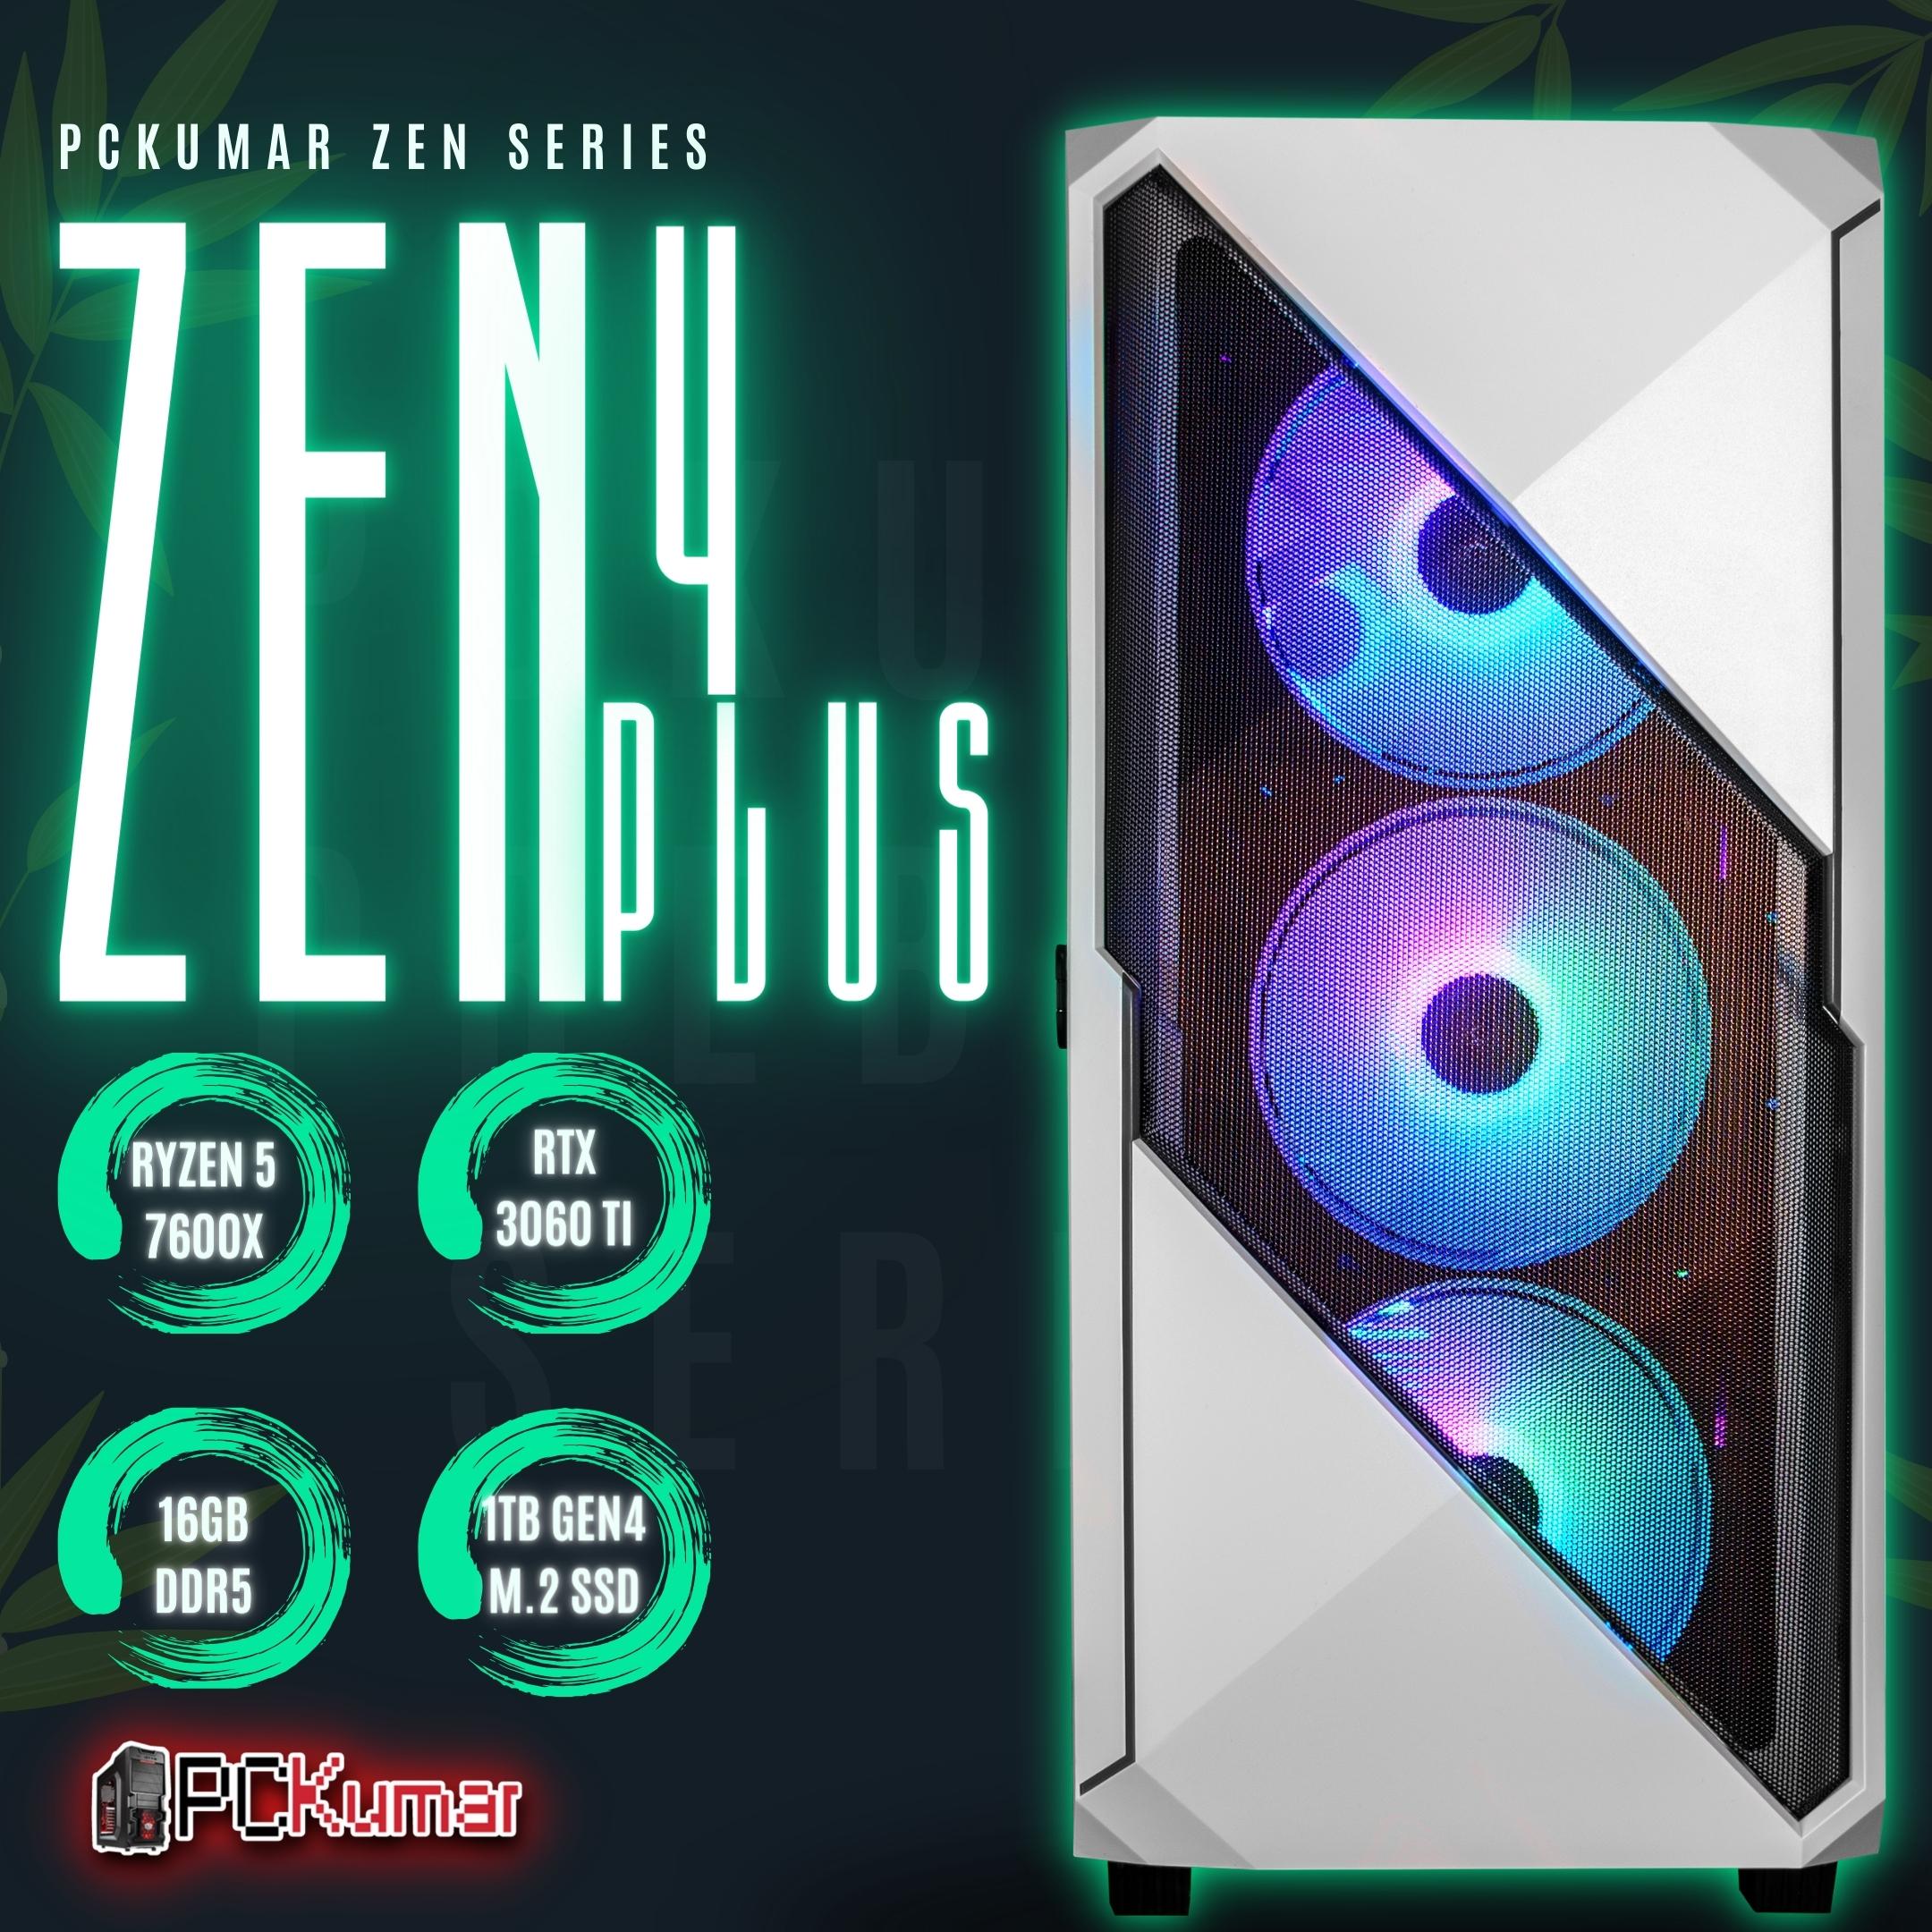 Zen 4 Gamer with AMD Ryzen 5 7600X + RTX 3060 12GB /RX 7600 8GB